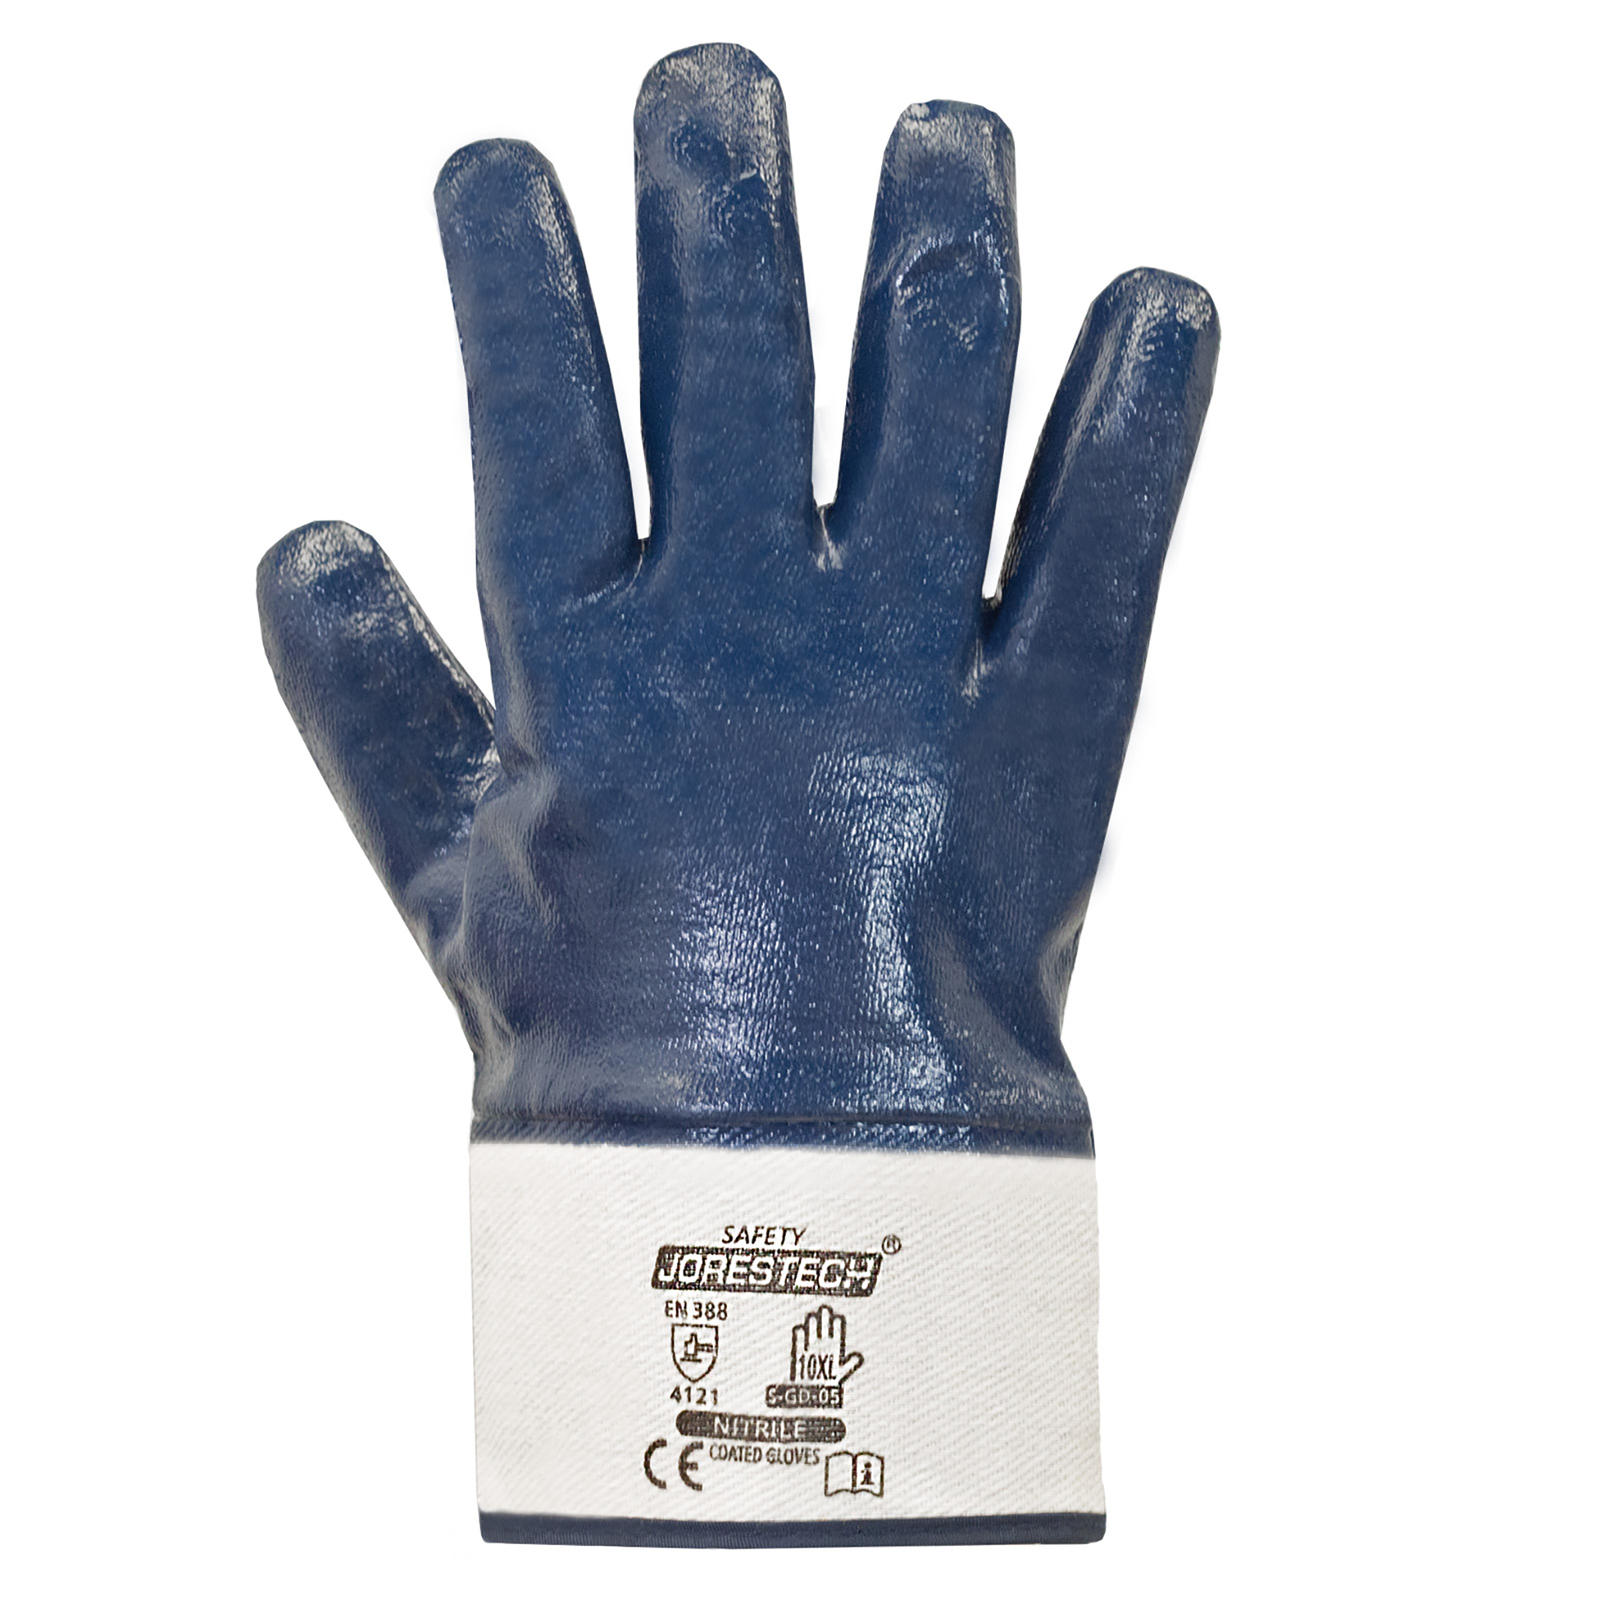 JORESTECH nitrile coated blue safety work glove